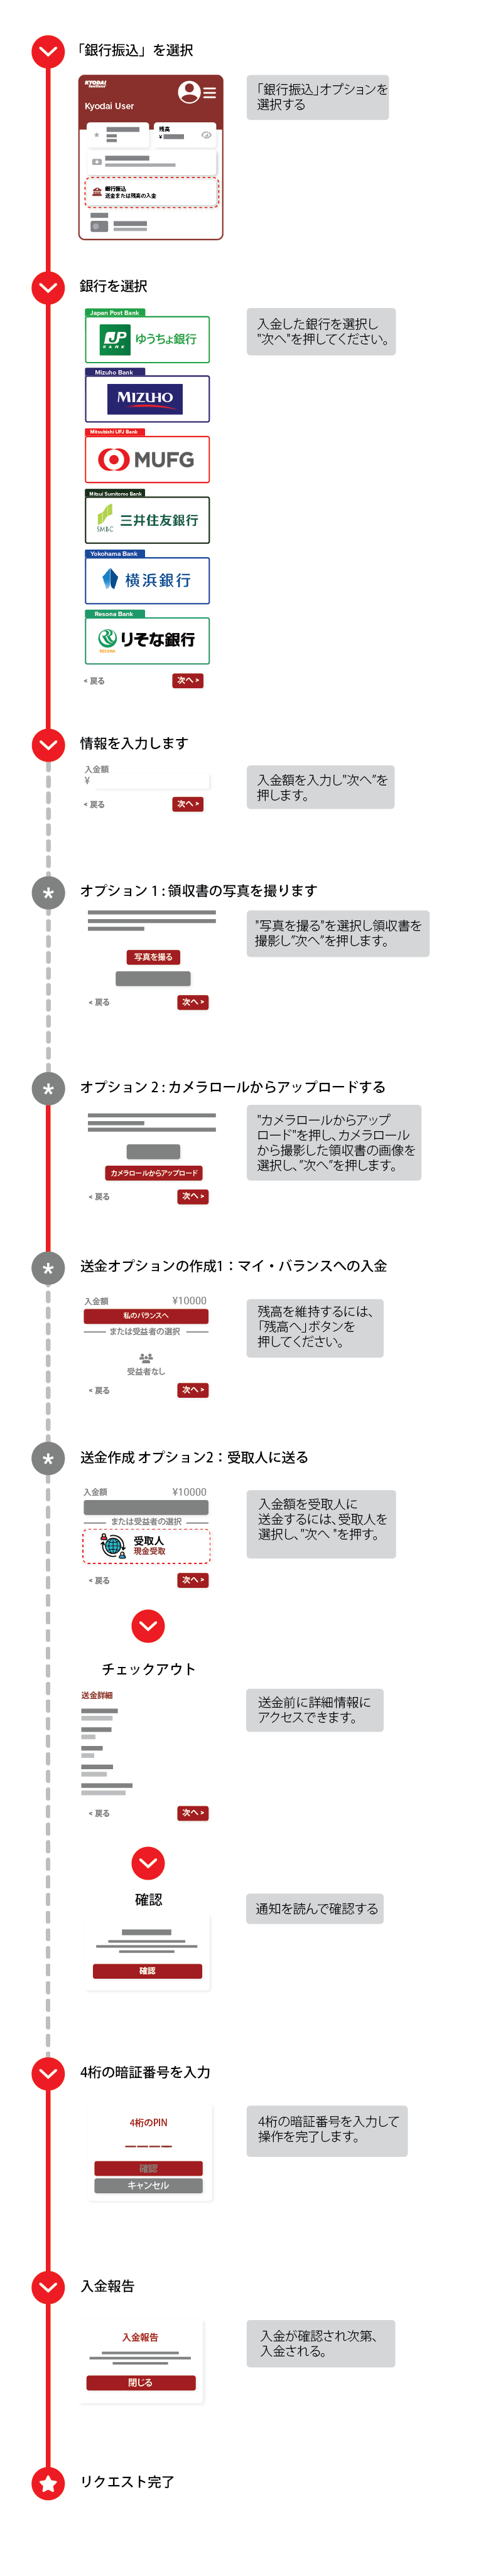 KyodaiApp で入金を通知する方法について